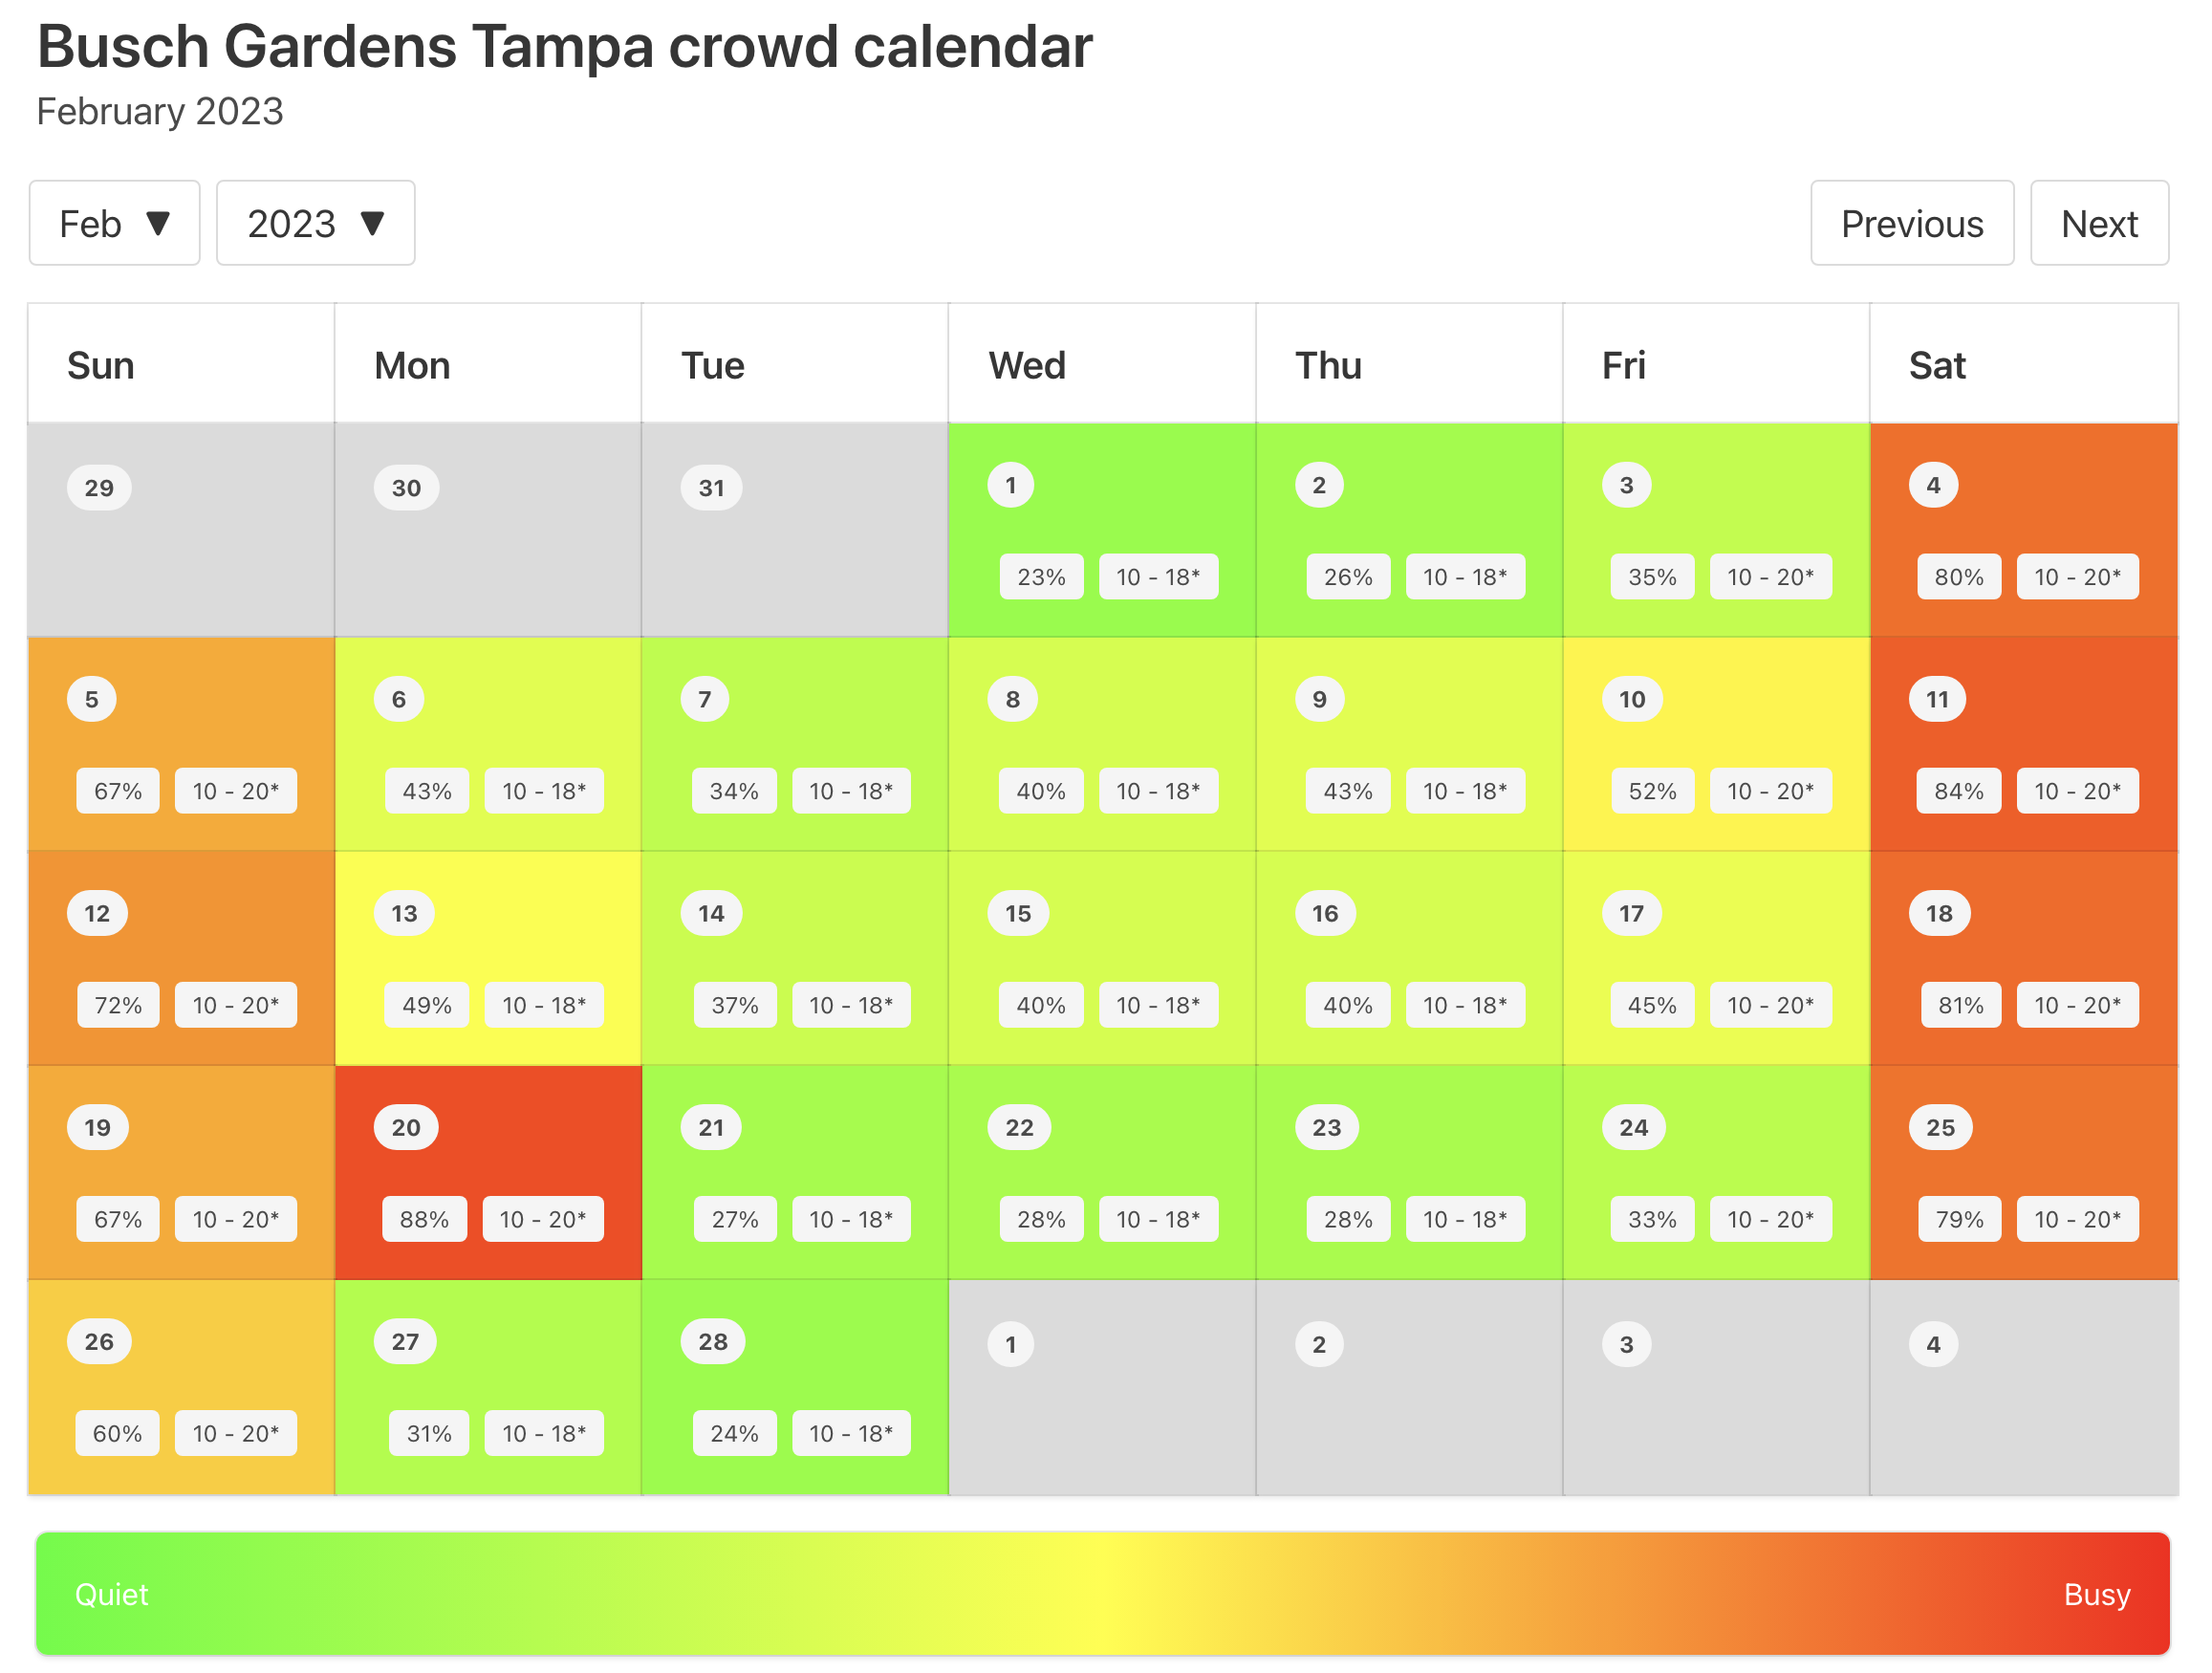 2023 Busch Gardens Tampa Crowd Calendar AVOID THE BUSY DAYS